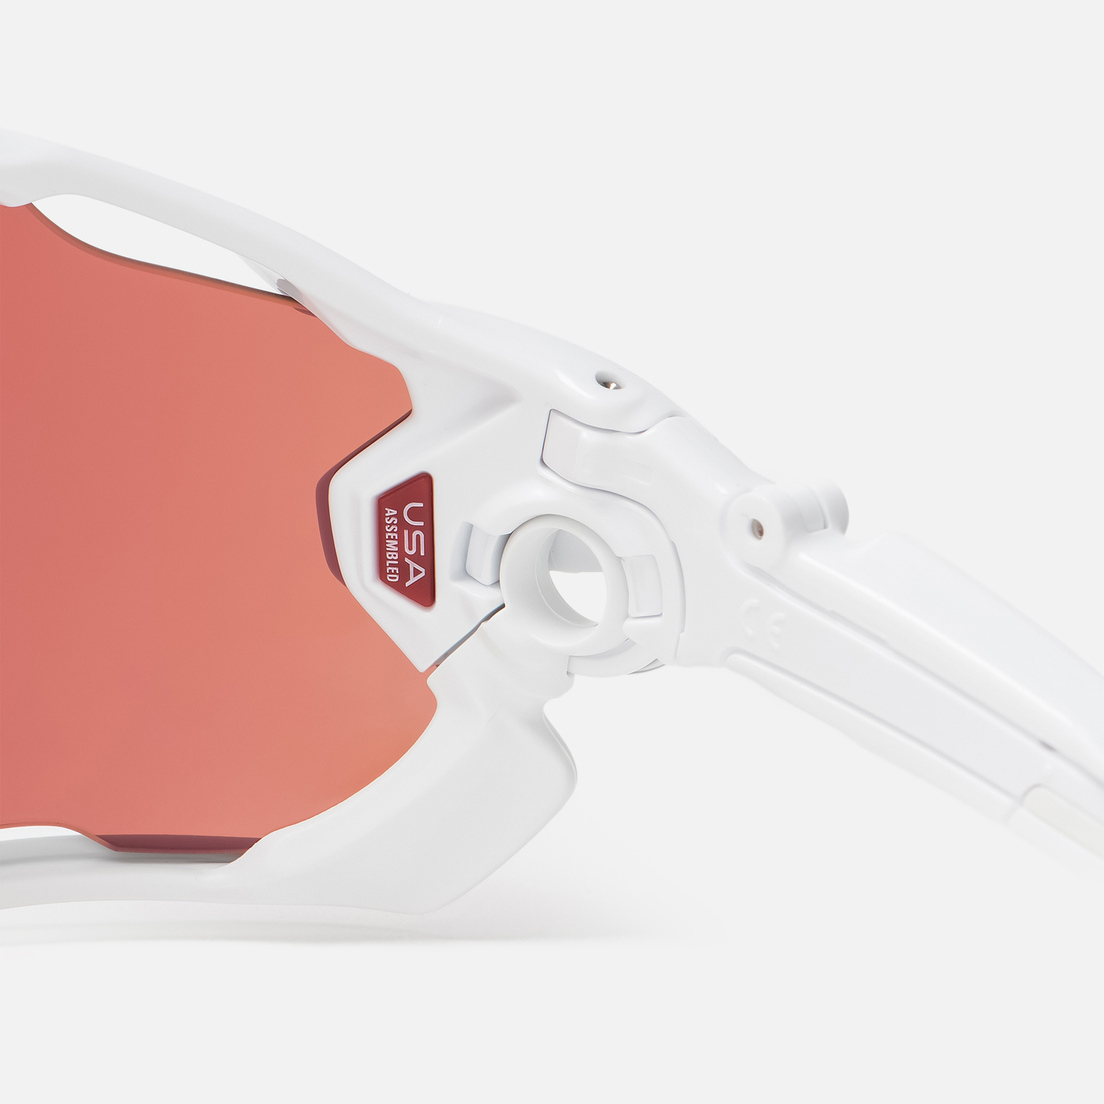 Oakley Солнцезащитные очки Jawbreaker